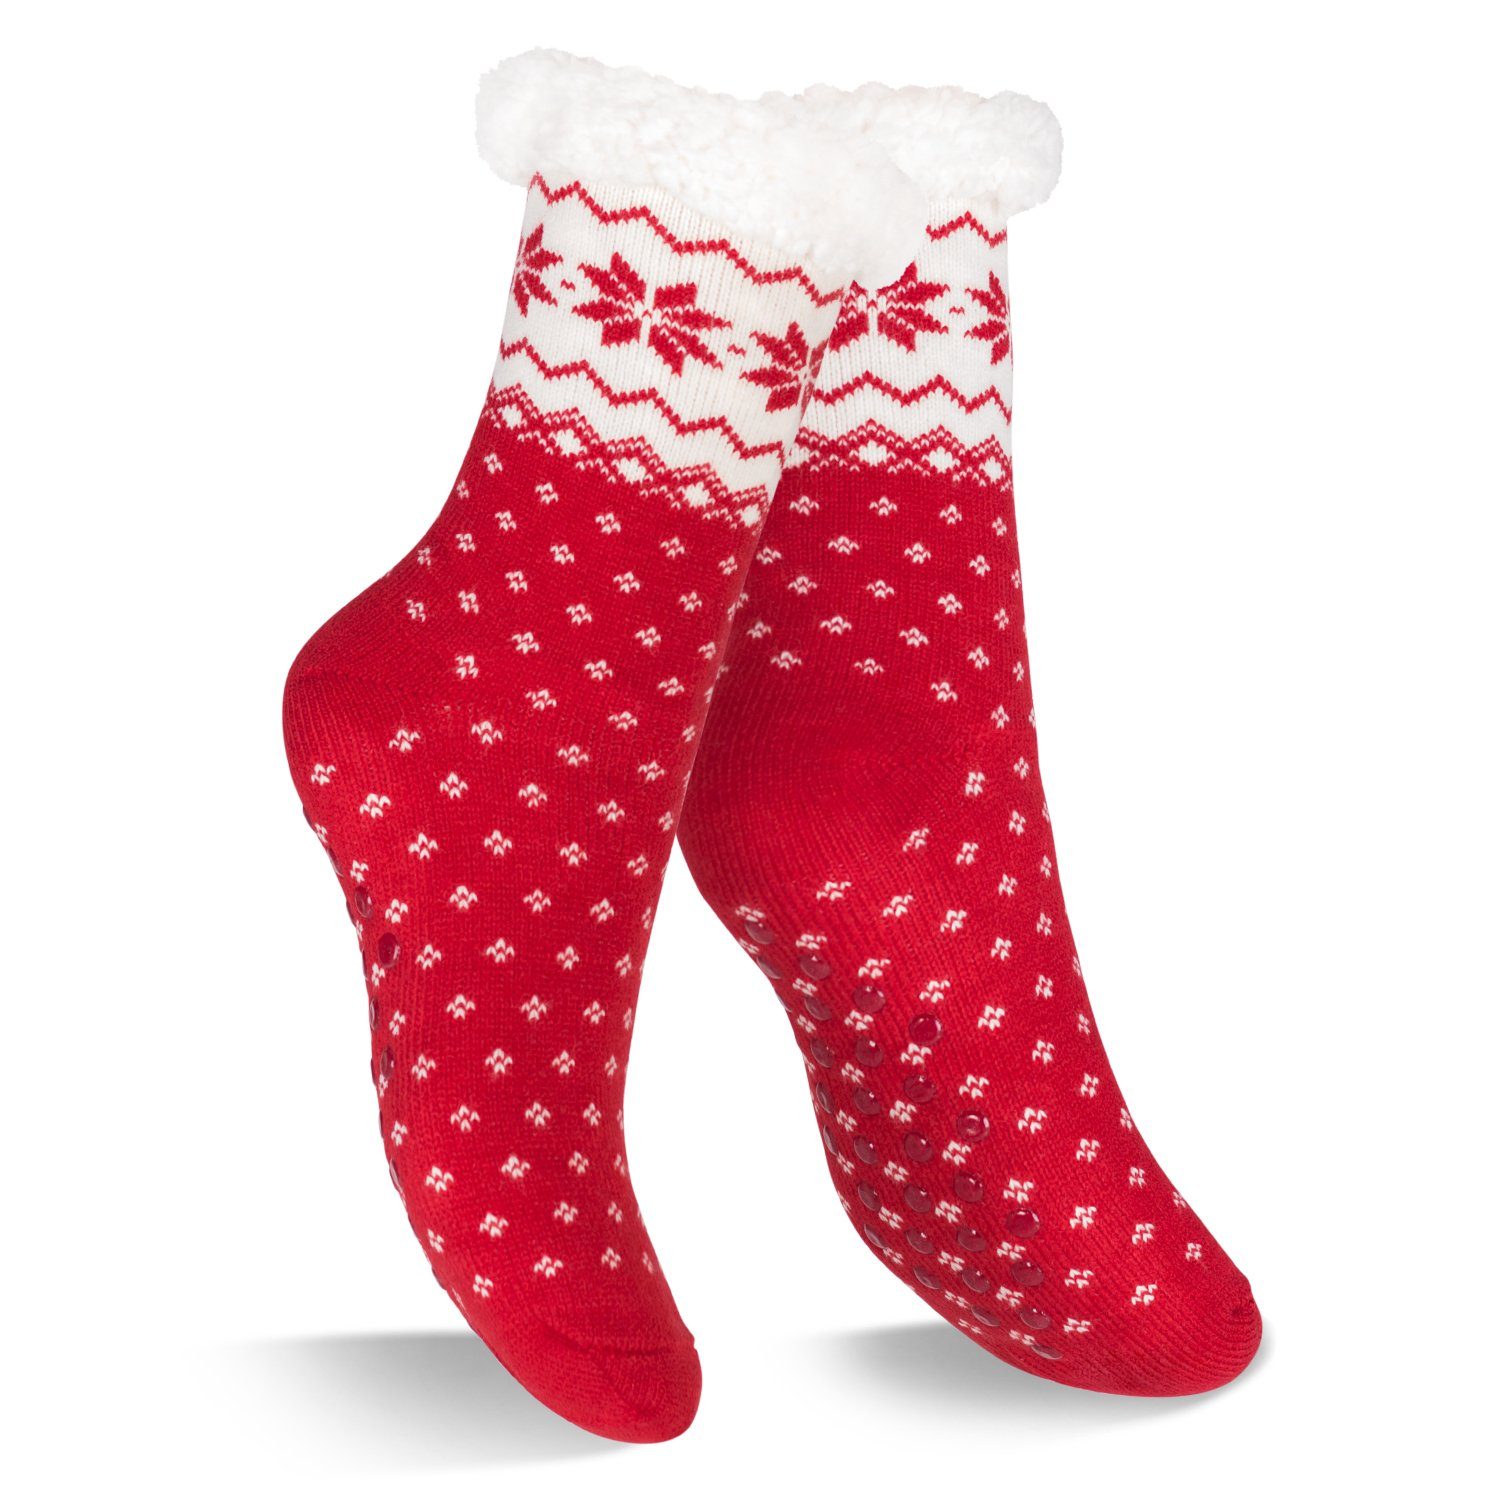 Footstar ABS-Socken Winter Haussocken für Damen & Herren (1/2 Paar) Kuschelsocken Rot